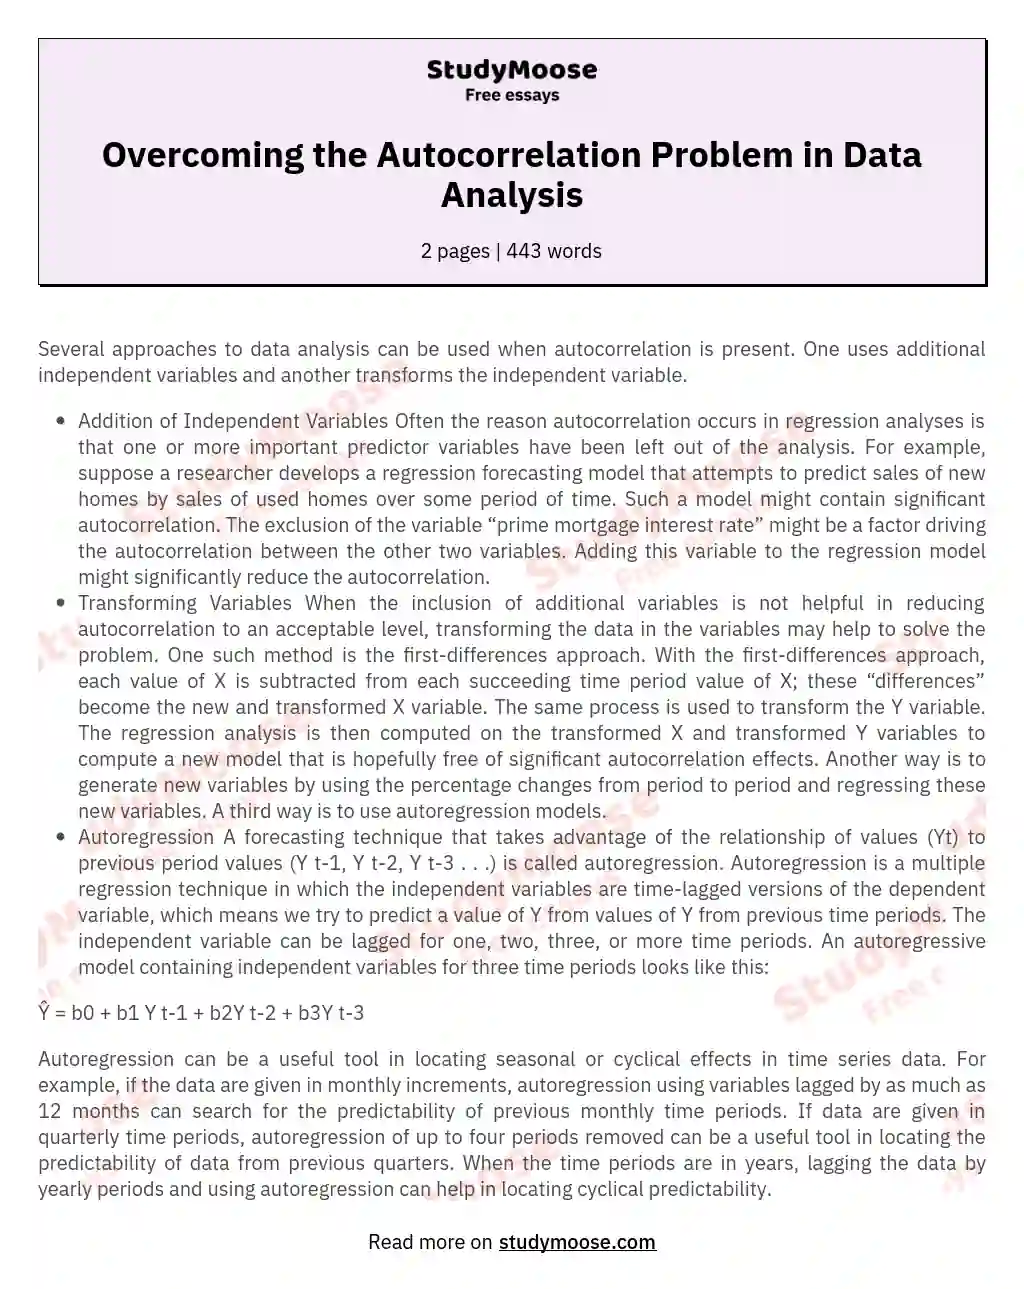 Overcoming the Autocorrelation Problem in Data Analysis essay